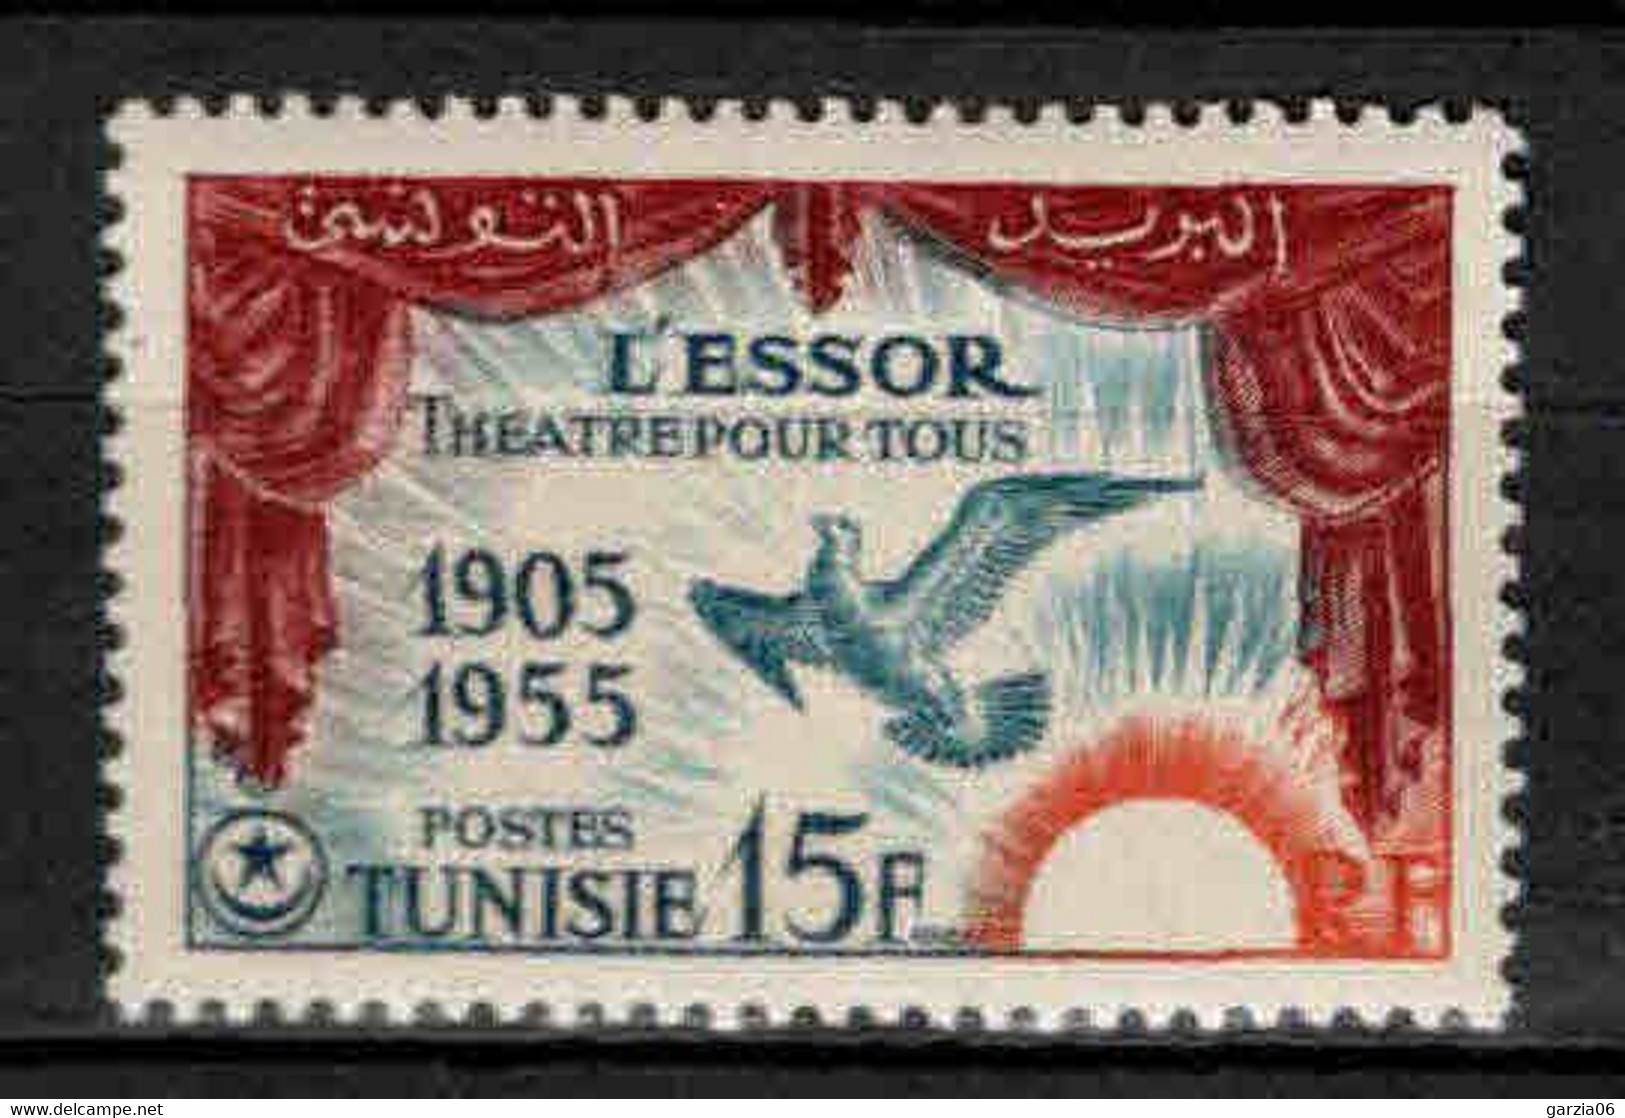 Tunisie - 1955  - Essor - N°389 - Neufs** - MNH - - Neufs